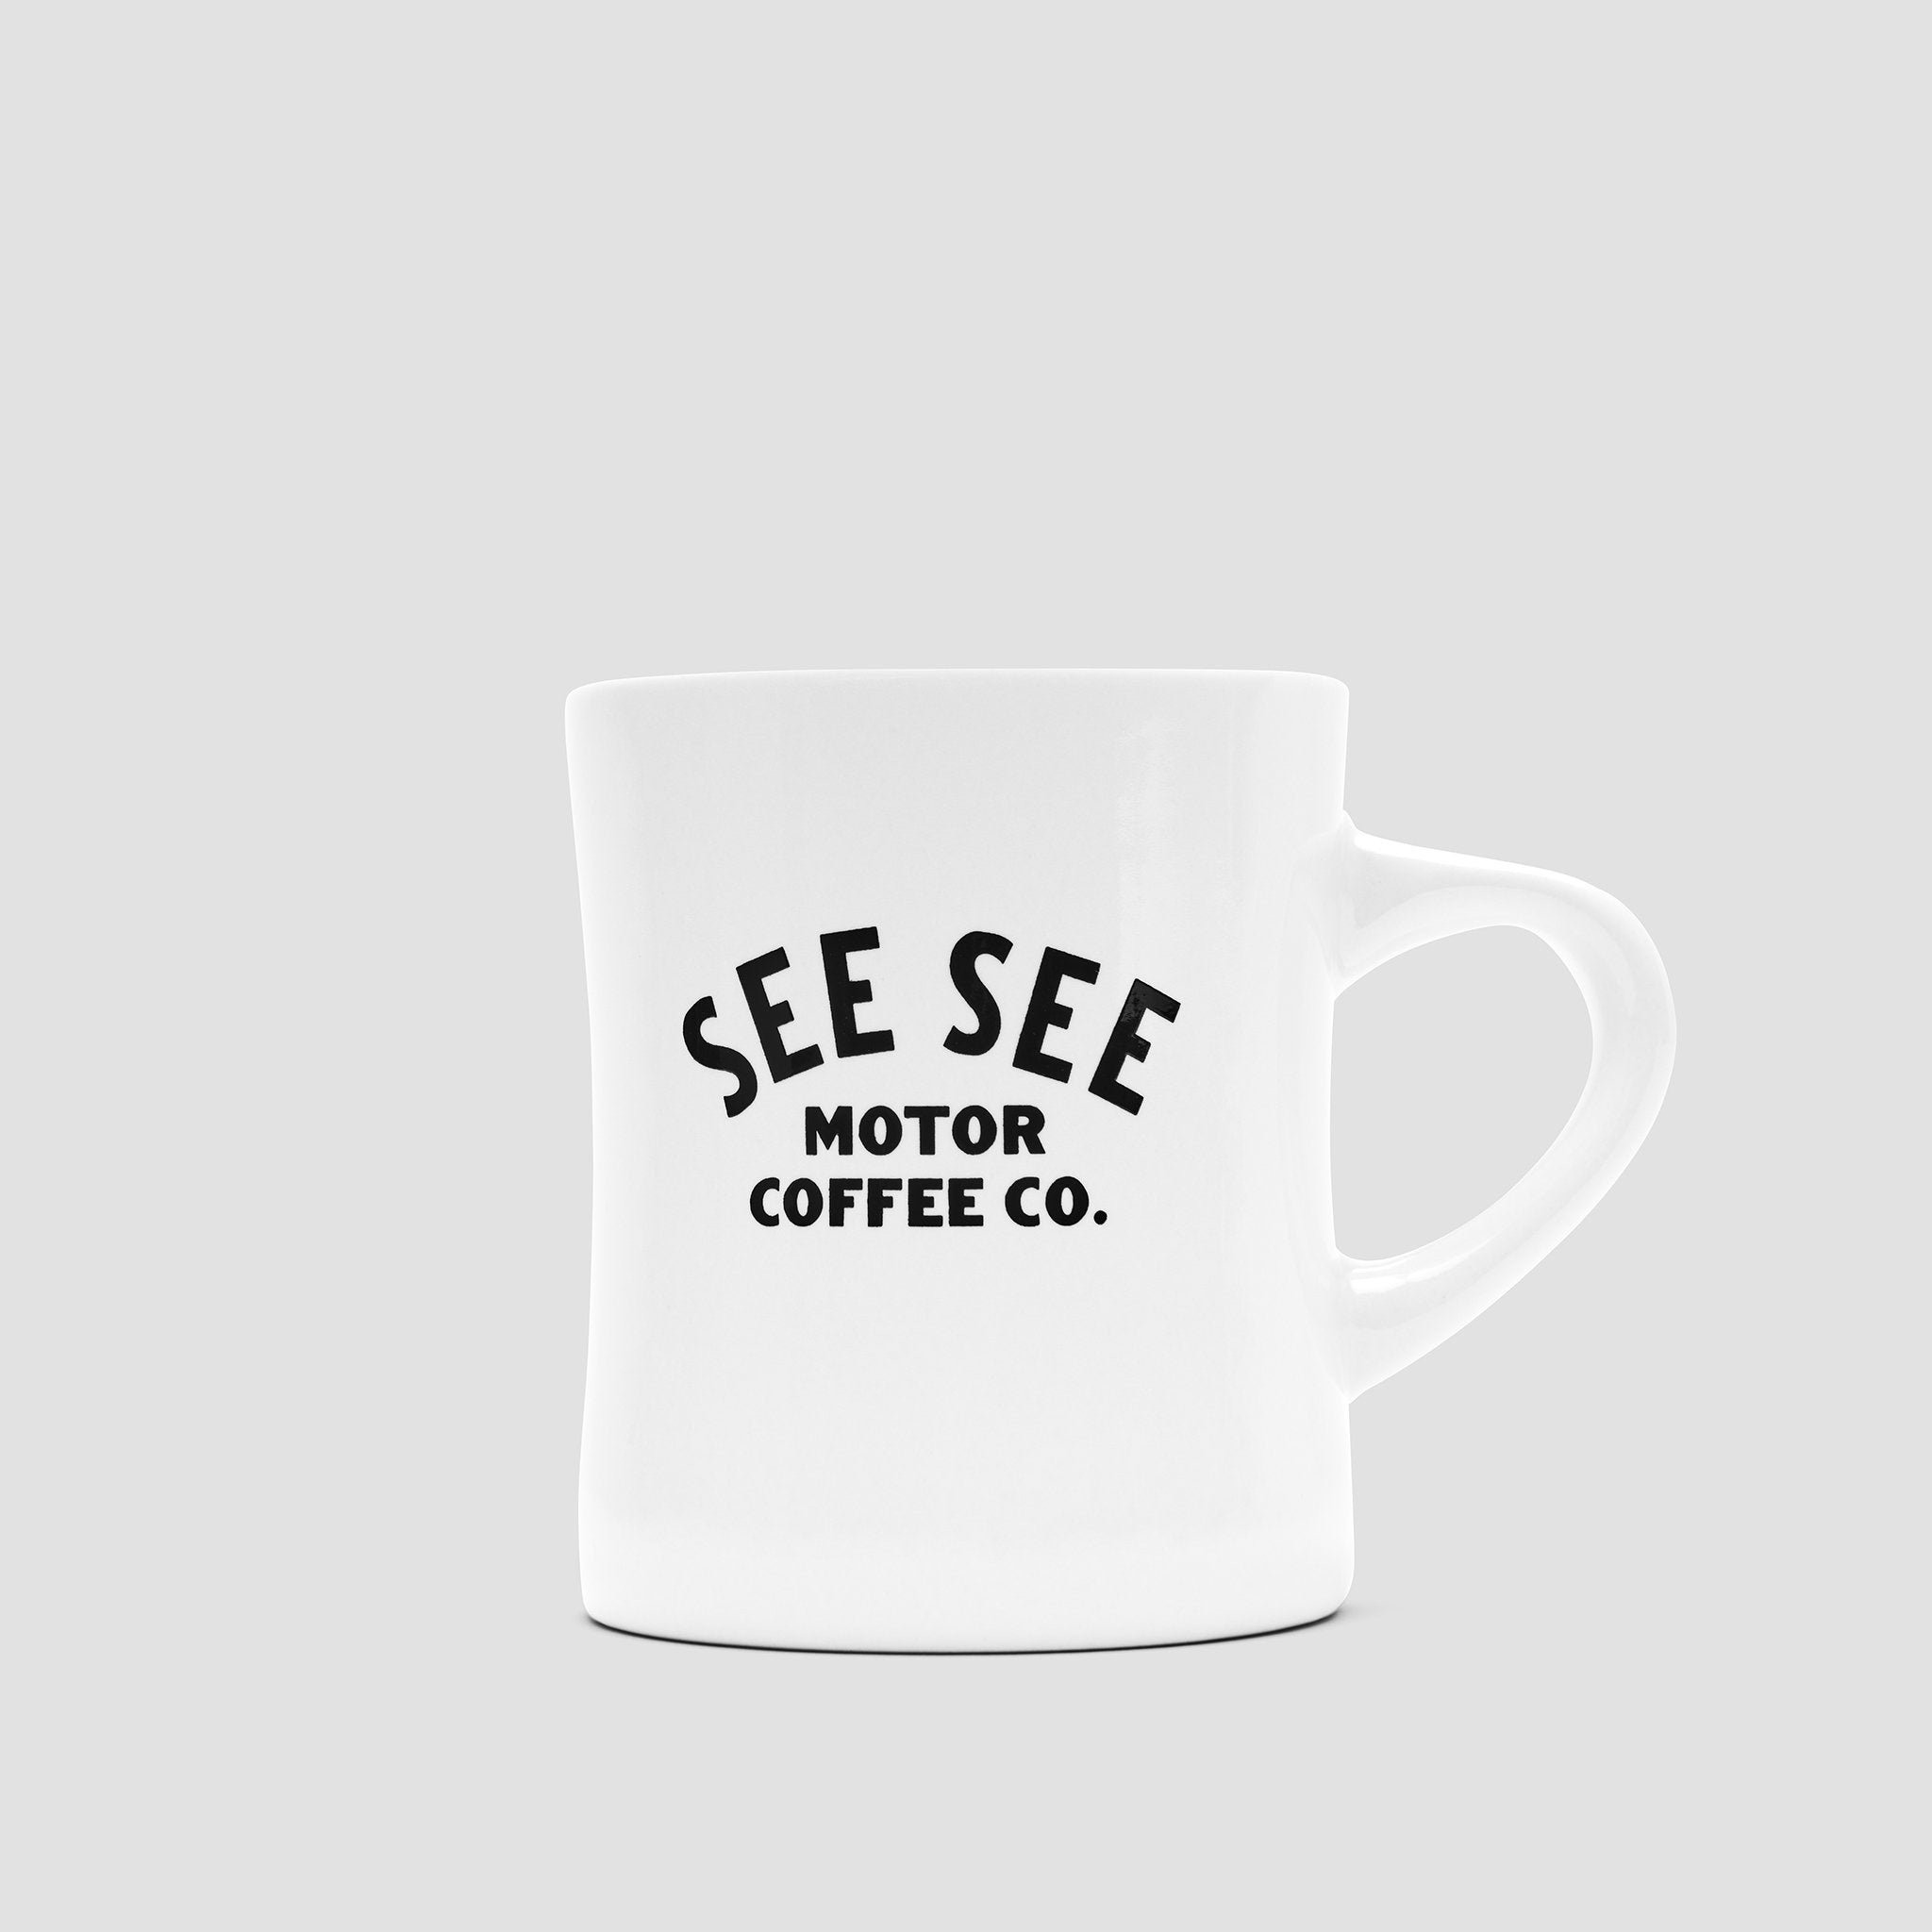 See See Motor Coffee Diner Mug - White